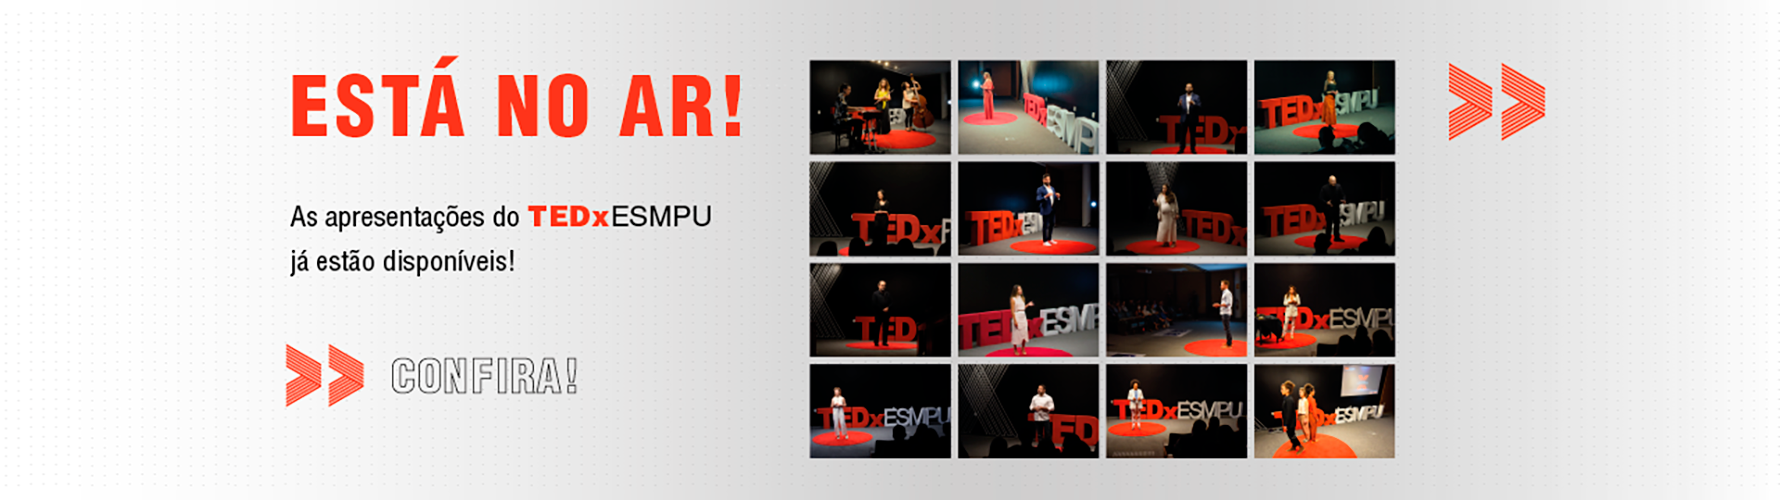 Está no ar! Assista as palestras do TEDxESMPU